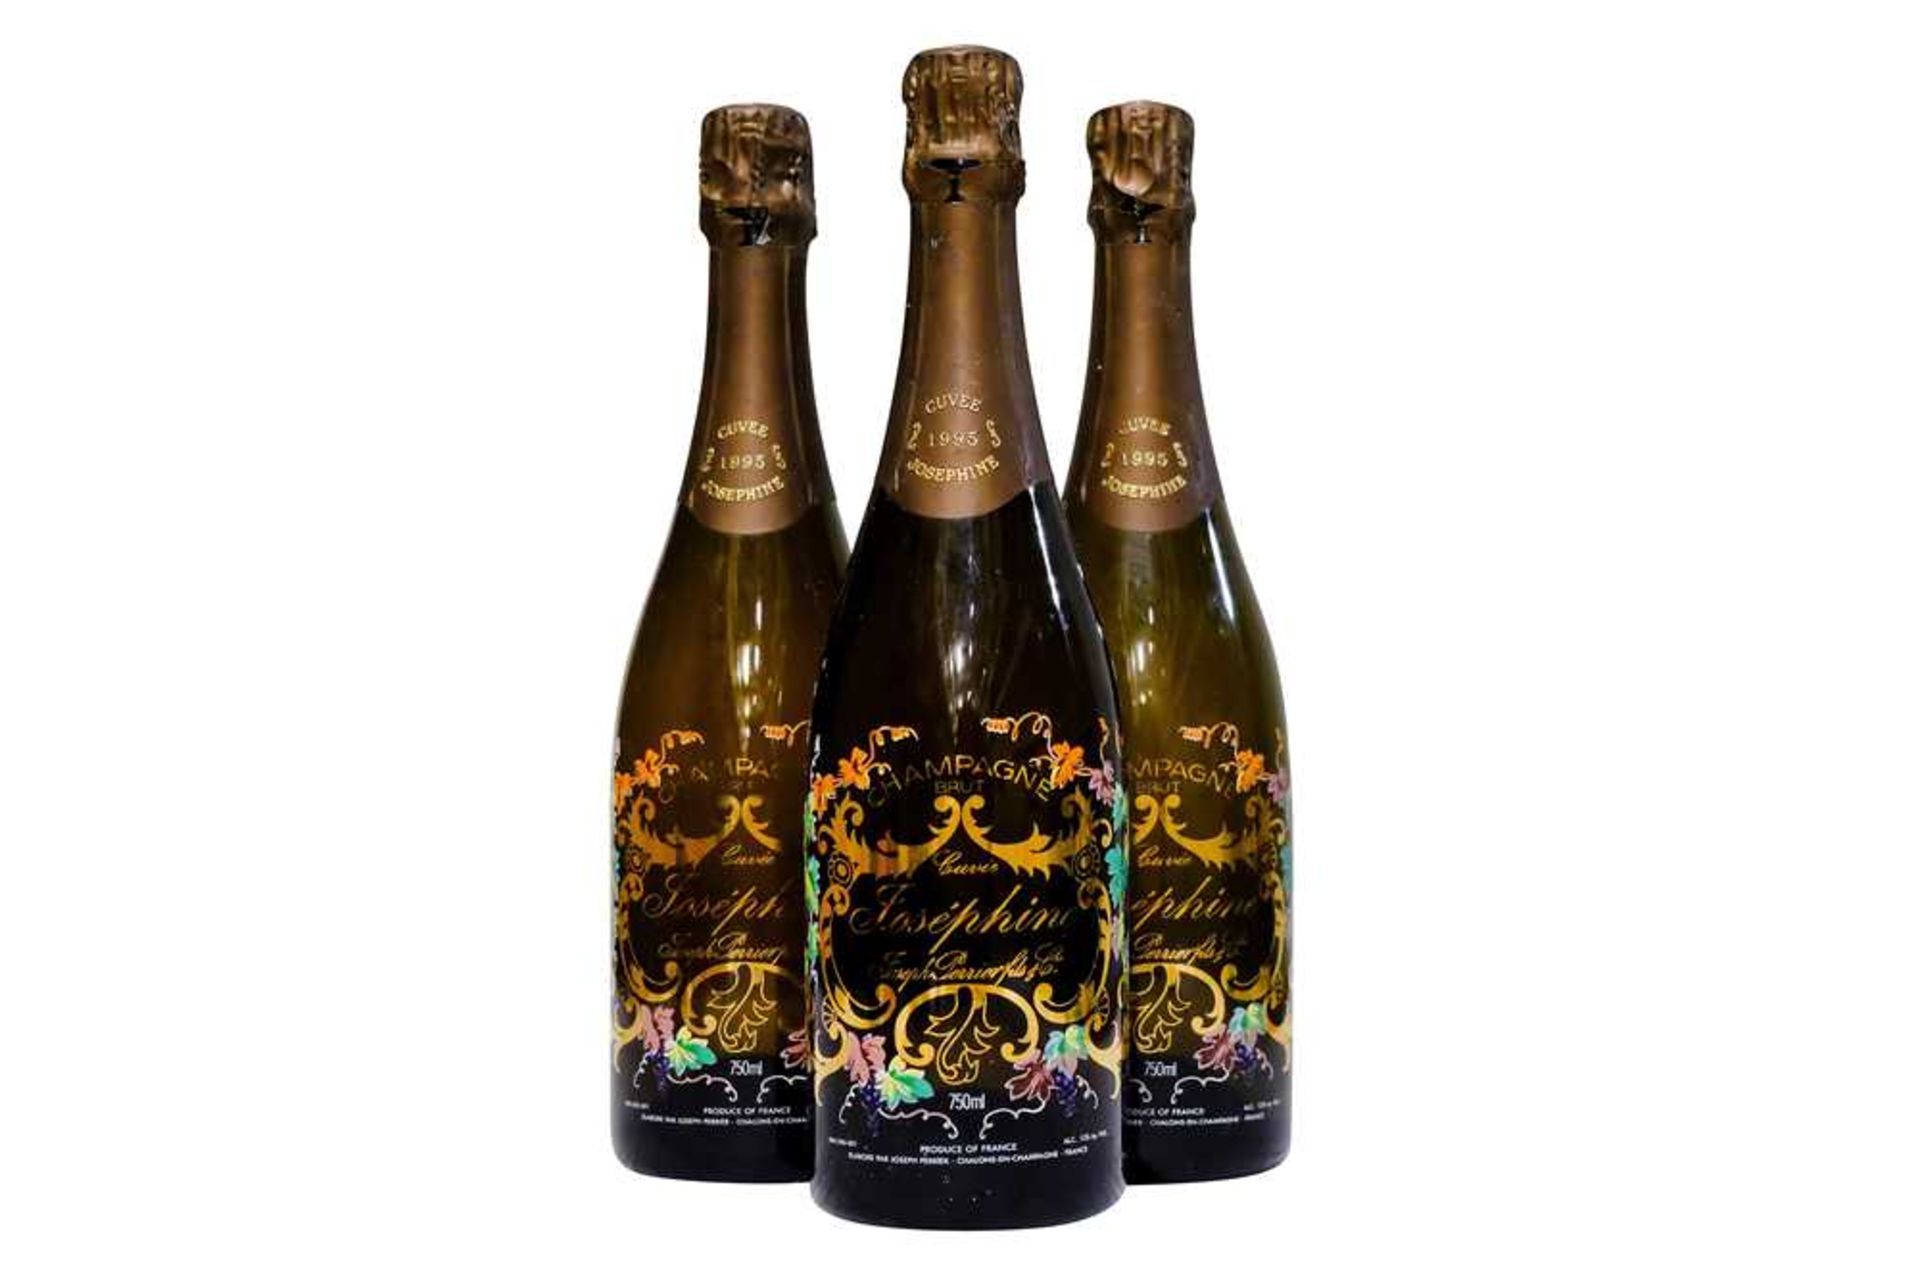 Joseph Perrier, Cuvee Josephine, Champagne-en-Chalons, 1995, three bottles